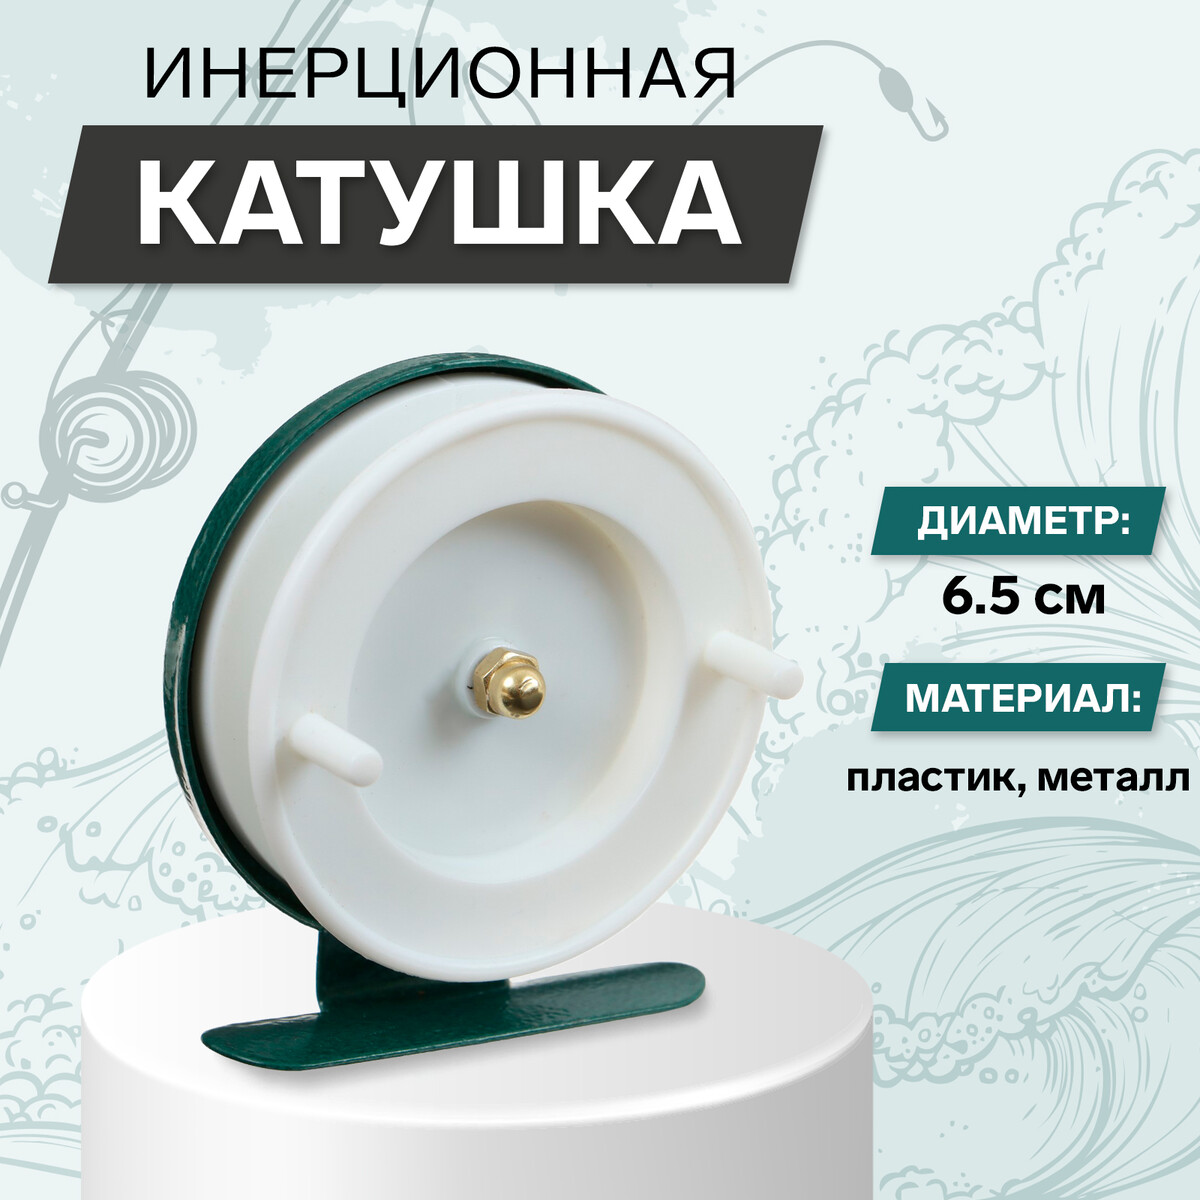 Катушка инерционная, металл пластик, диаметр 6.5 см, цвет белый-зеленый, 701